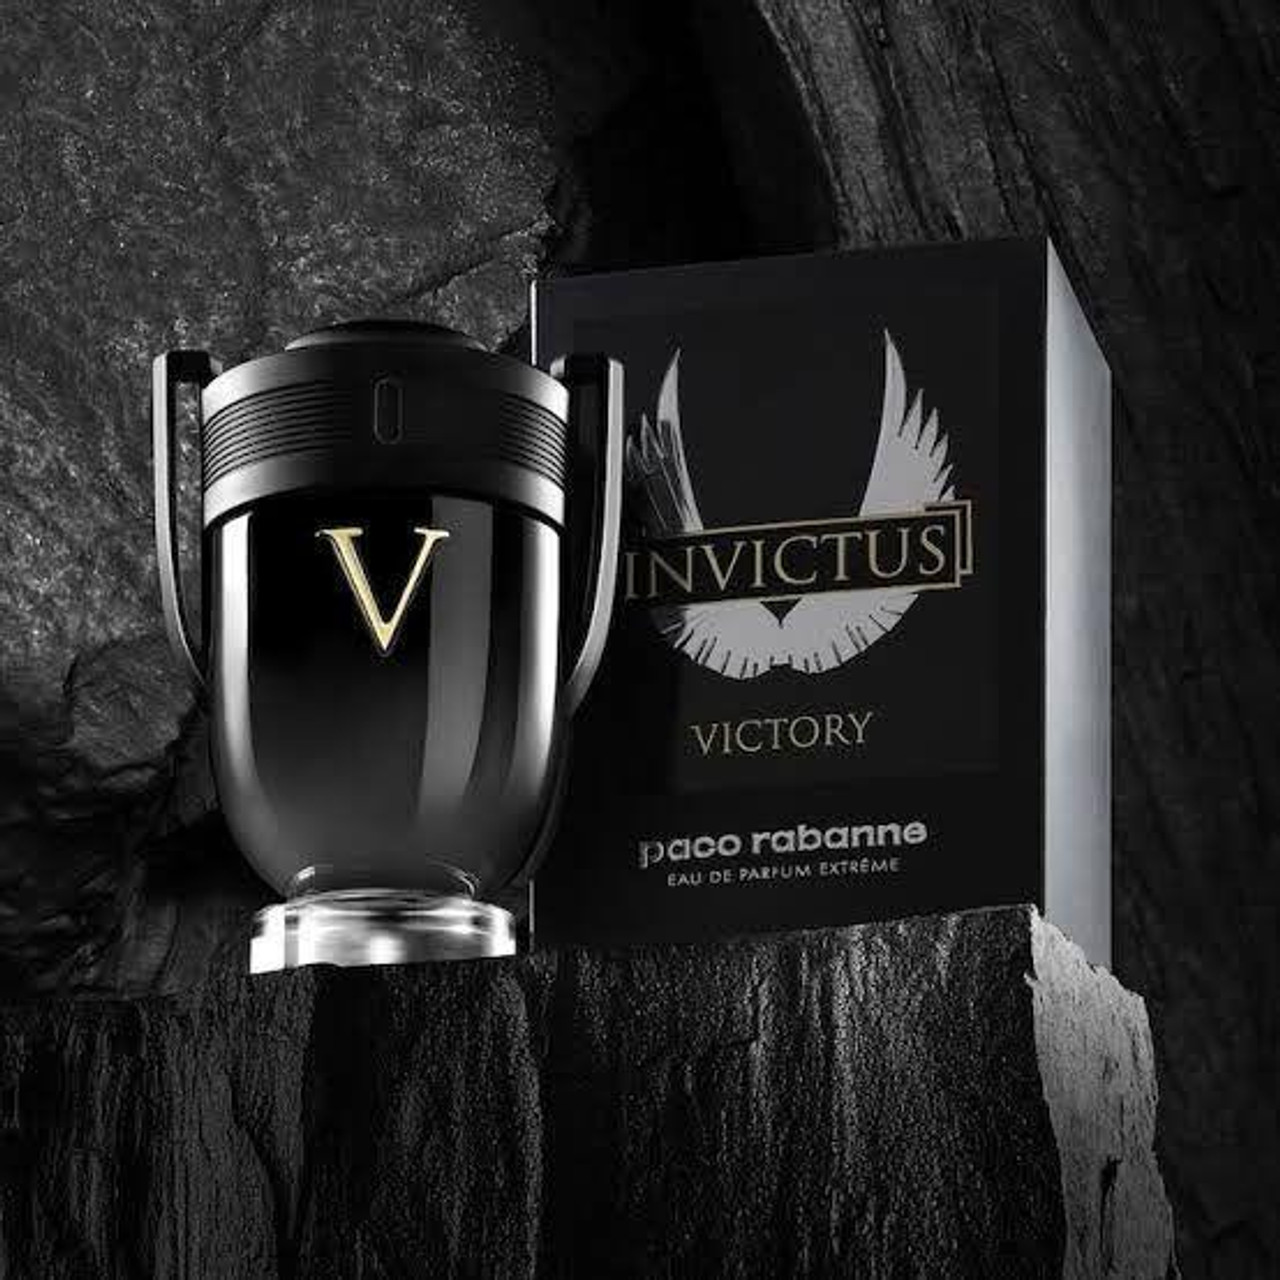 Invictus Paco Rabanne Victory Eau de parfum extreme 3.4oz - Hollywood Style  Perfumes